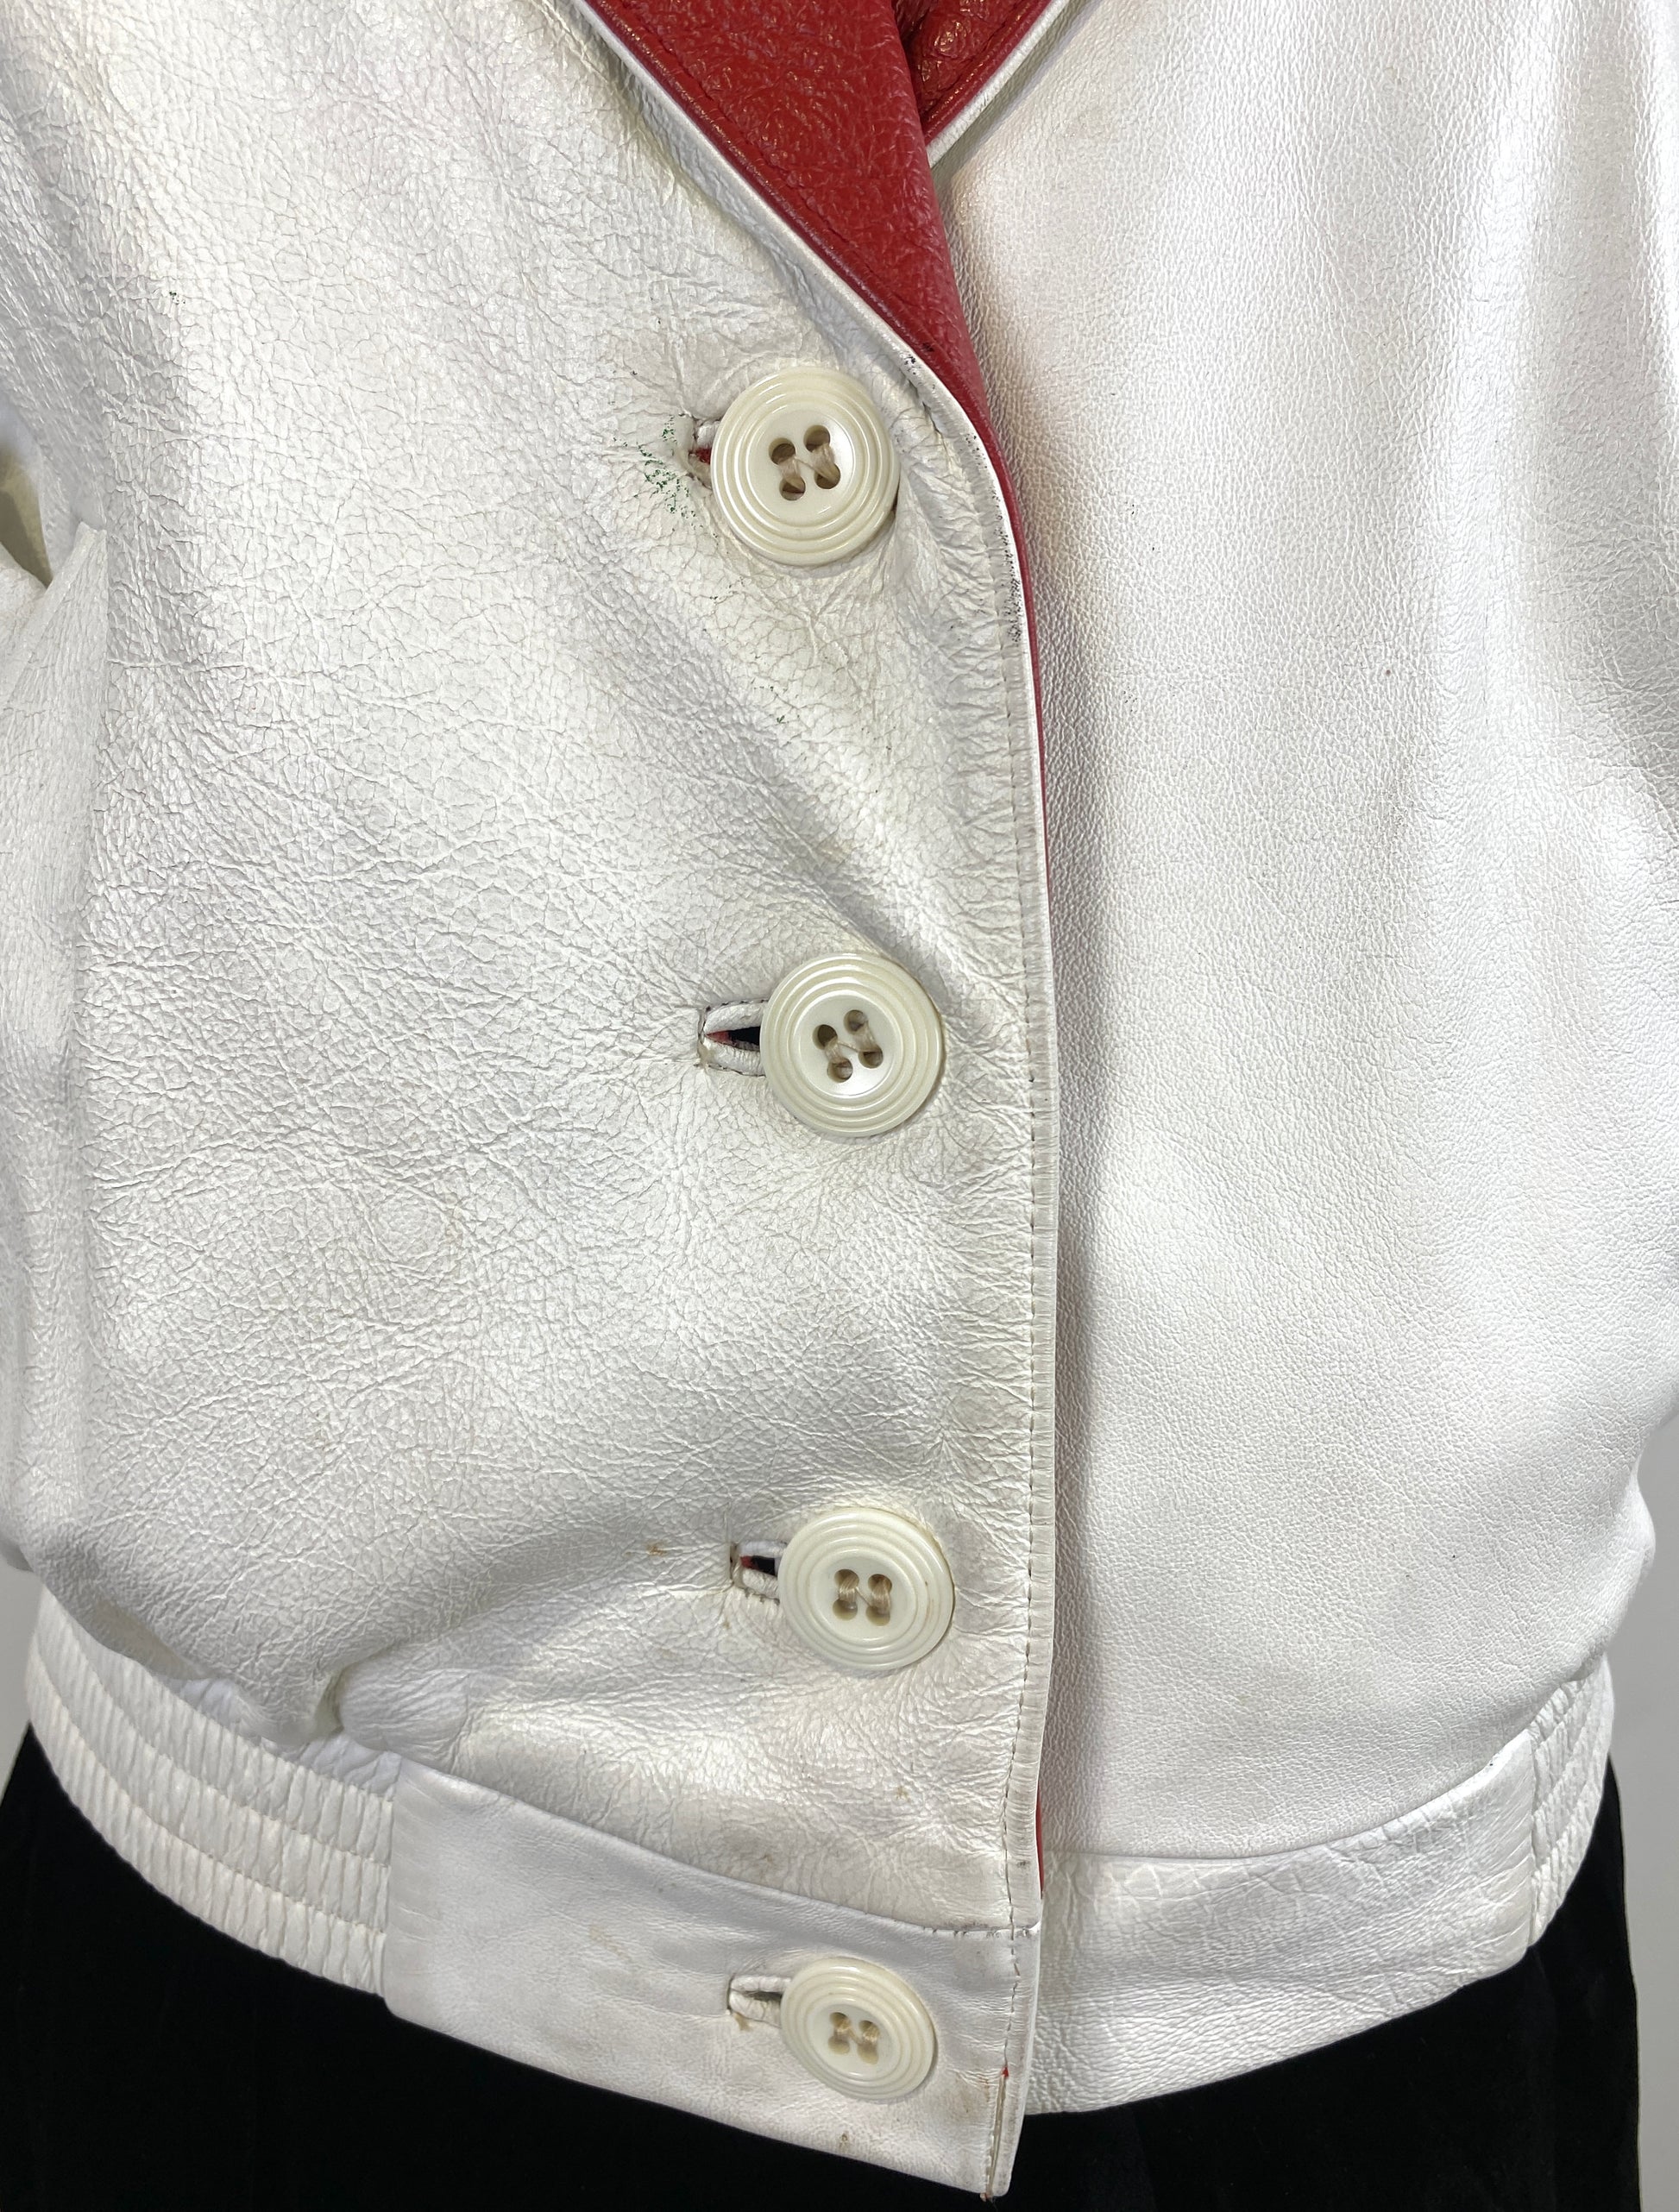 Vintage 1980s Women's White/ Red Leather Jacket, Medium